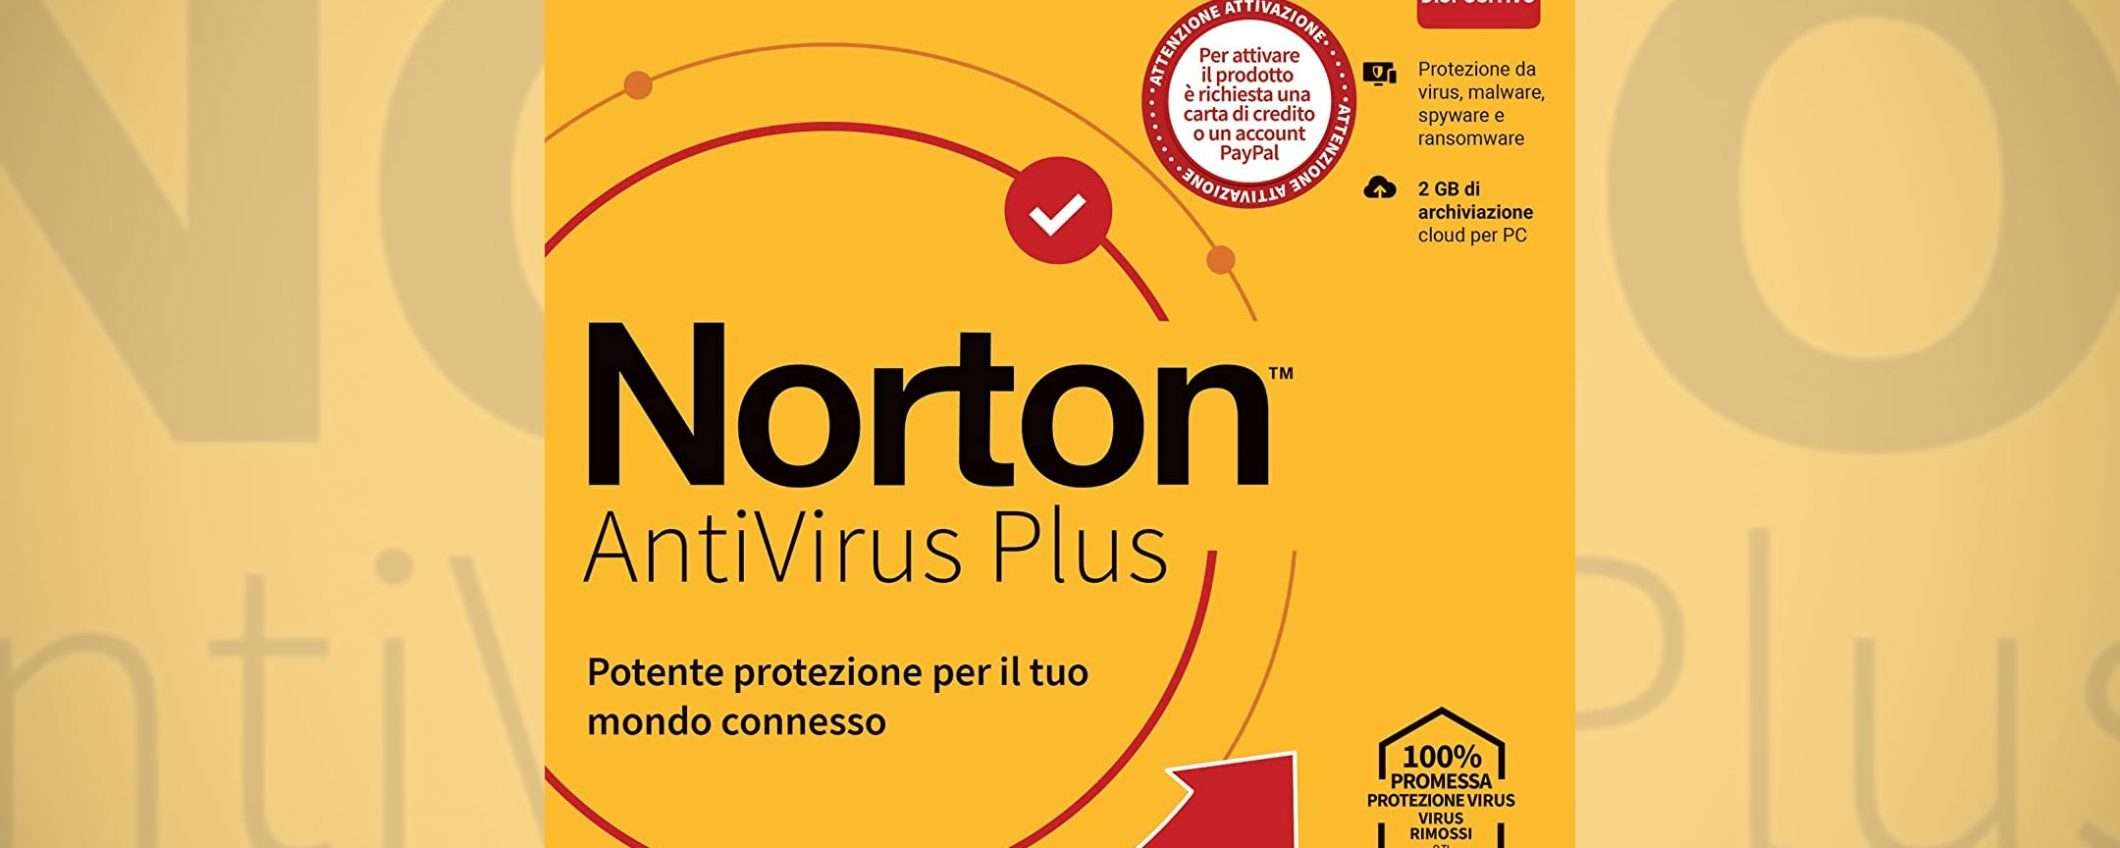 Norton AntiVirus Plus 2020, offerta -47%